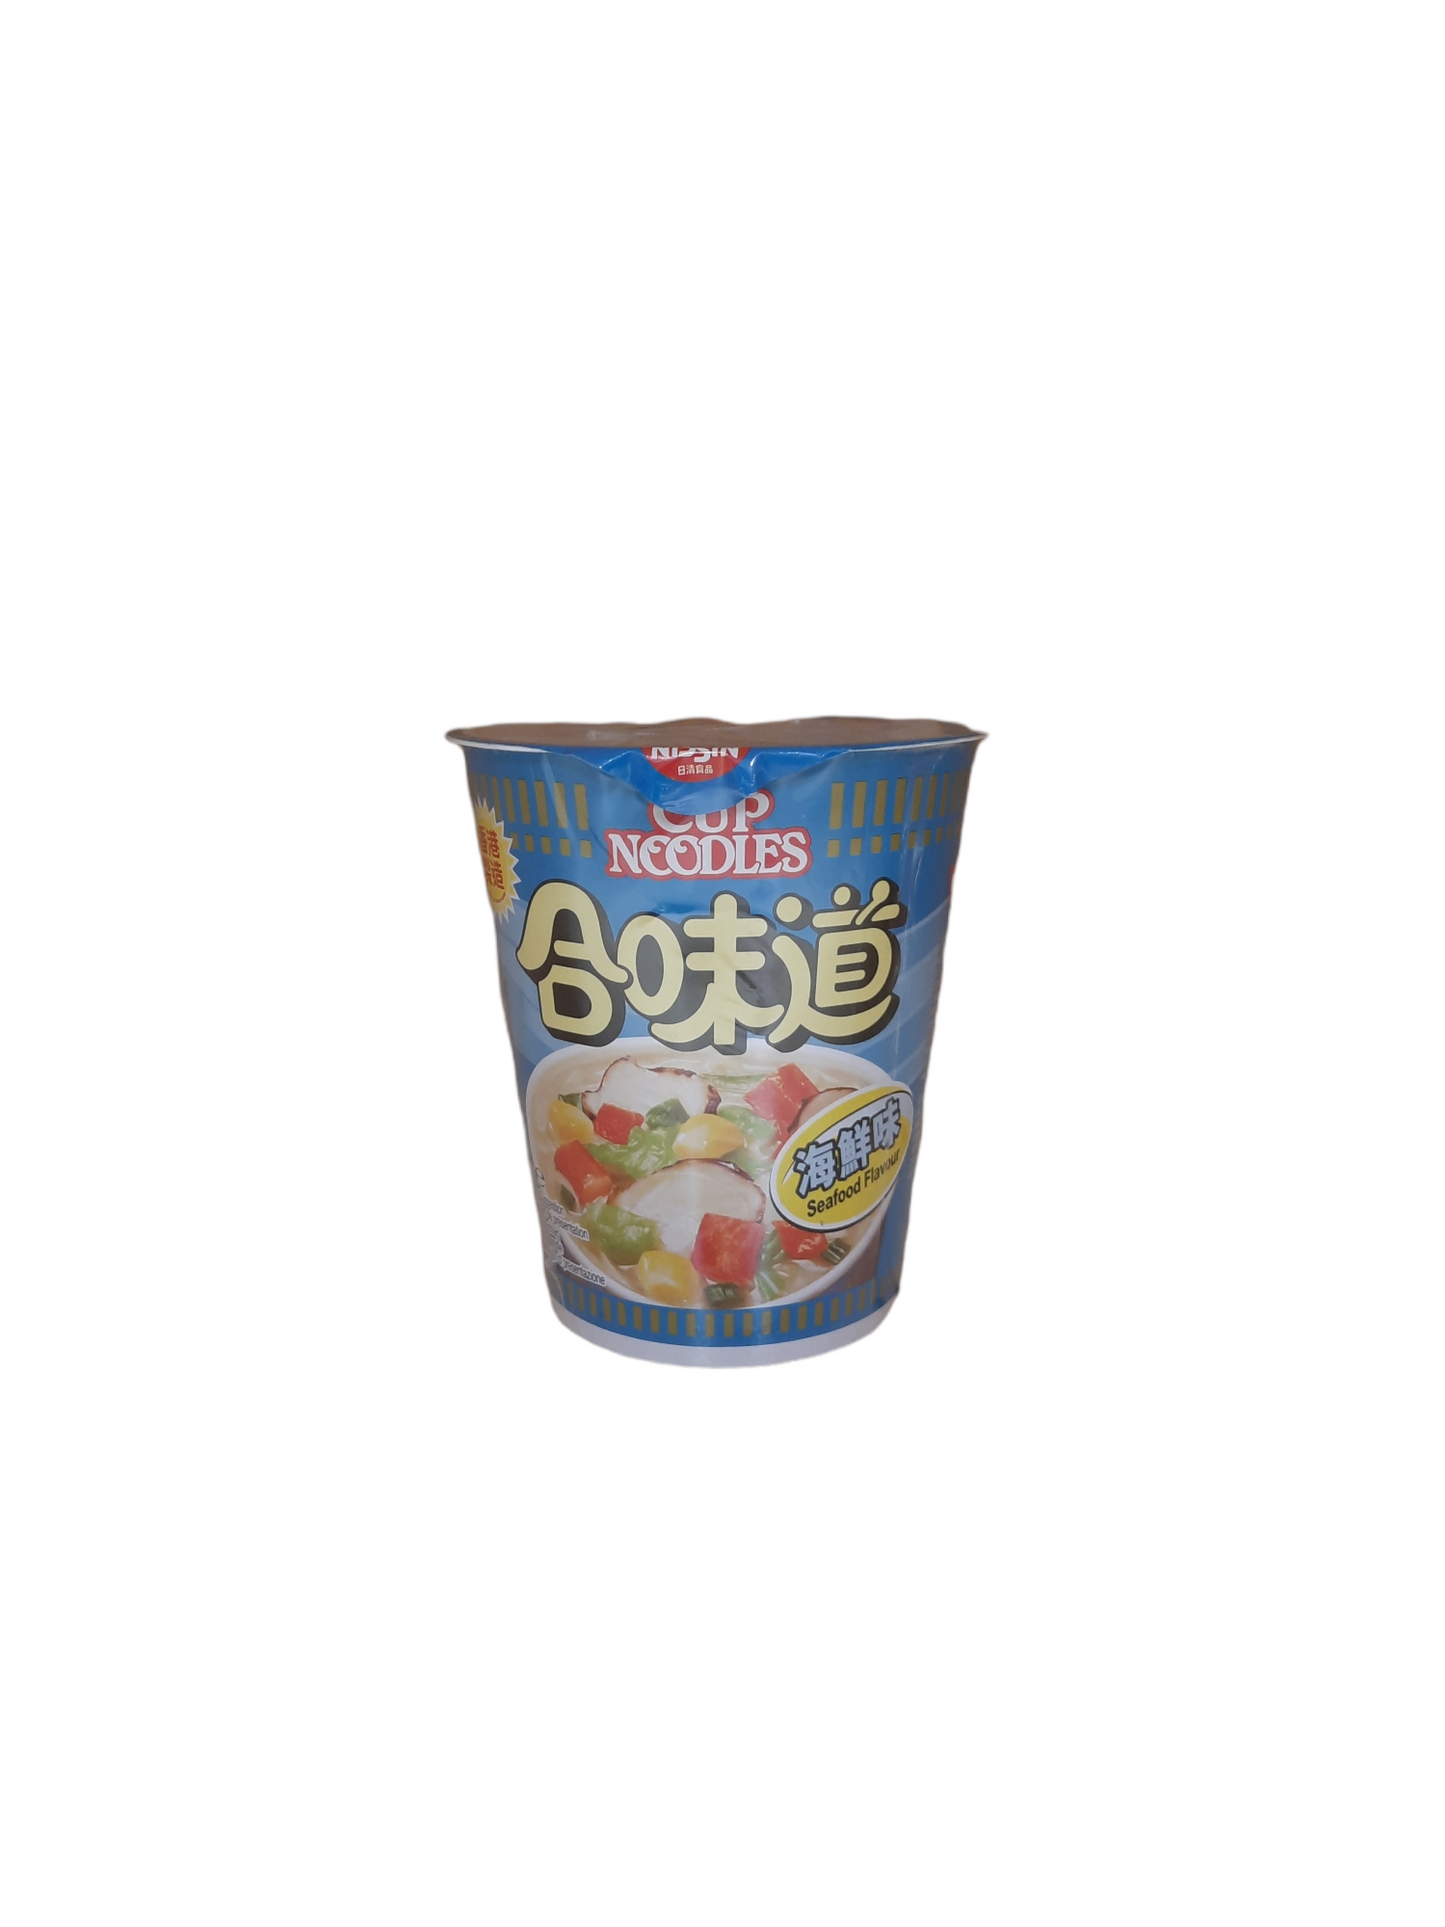 HK Nissin Cup Noodles-Seafood 75g 日清合味道海鮮味杯麵